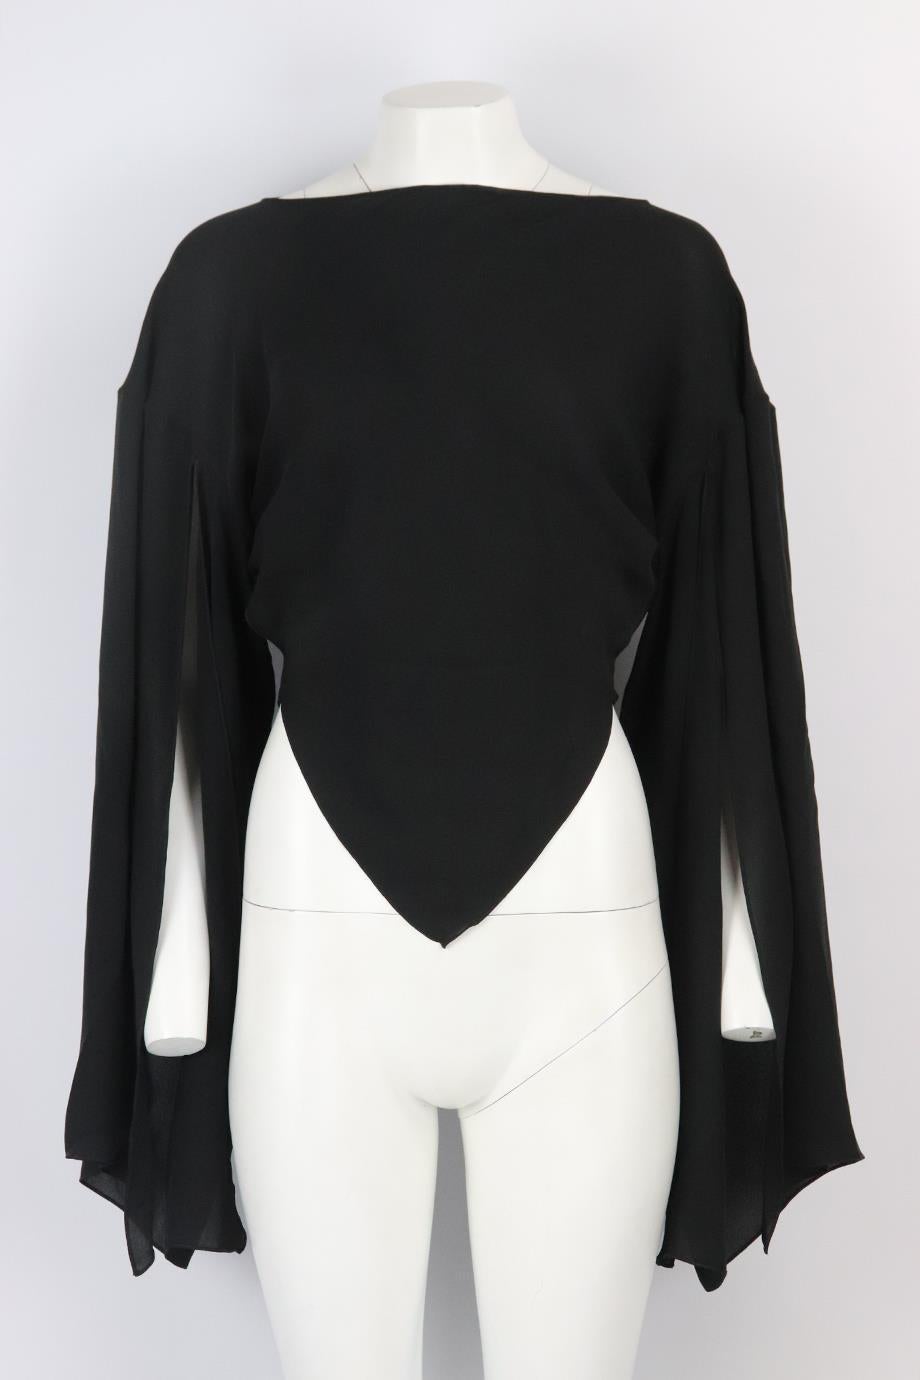 Balenciaga cropped silk top. Black. Long sleeve, boat neck. Slips on. 100% Silk. Size: FR 34 (UK 6, US 2, IT 38). Bust: 51 in. Waist: 32 in. Length: 22 in. 
